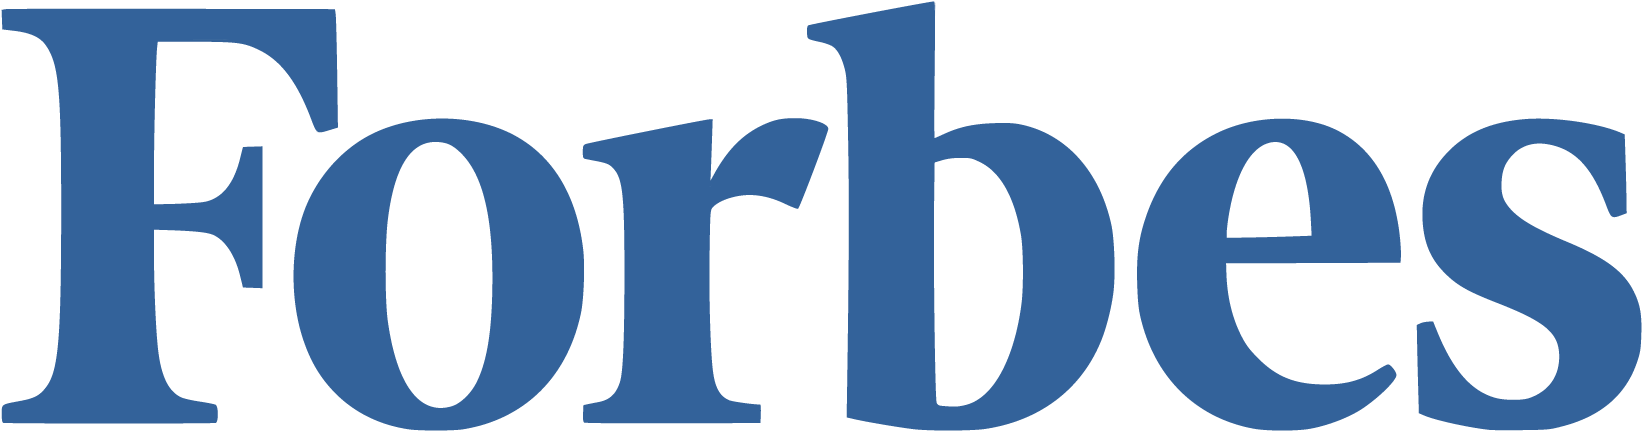 Forbes Magazine Logo Blue PNG